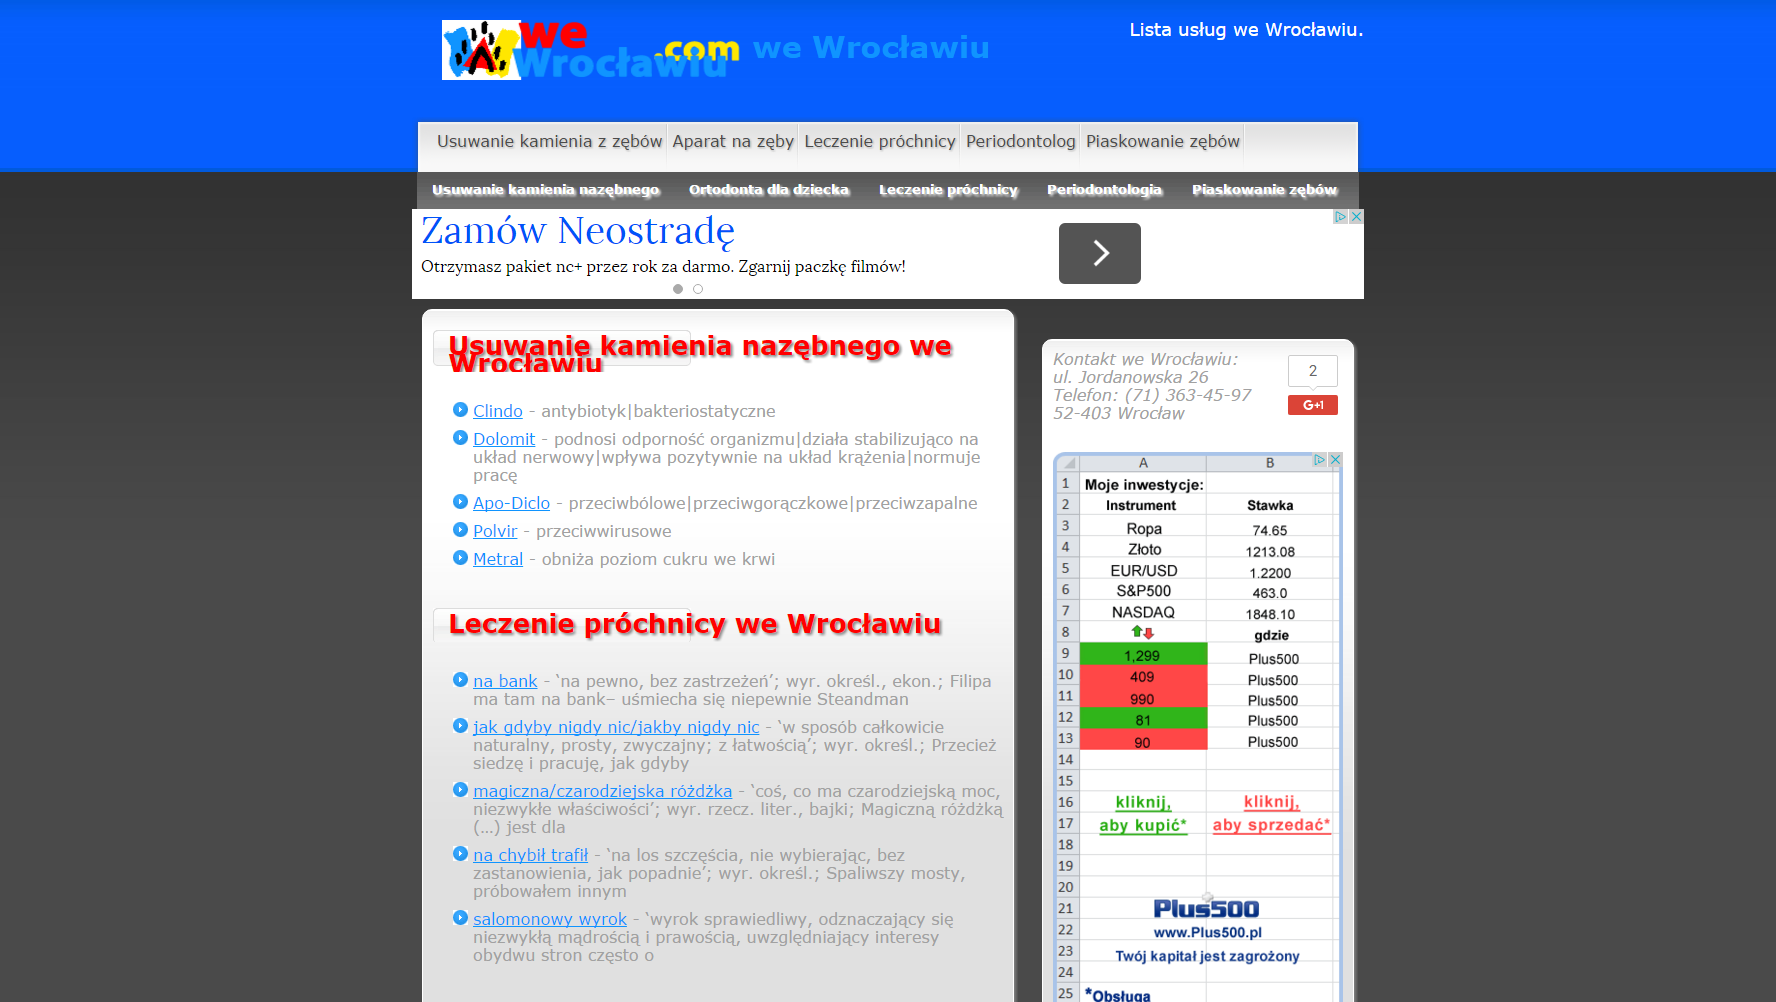 Proyecto We-Wrocławiu.com